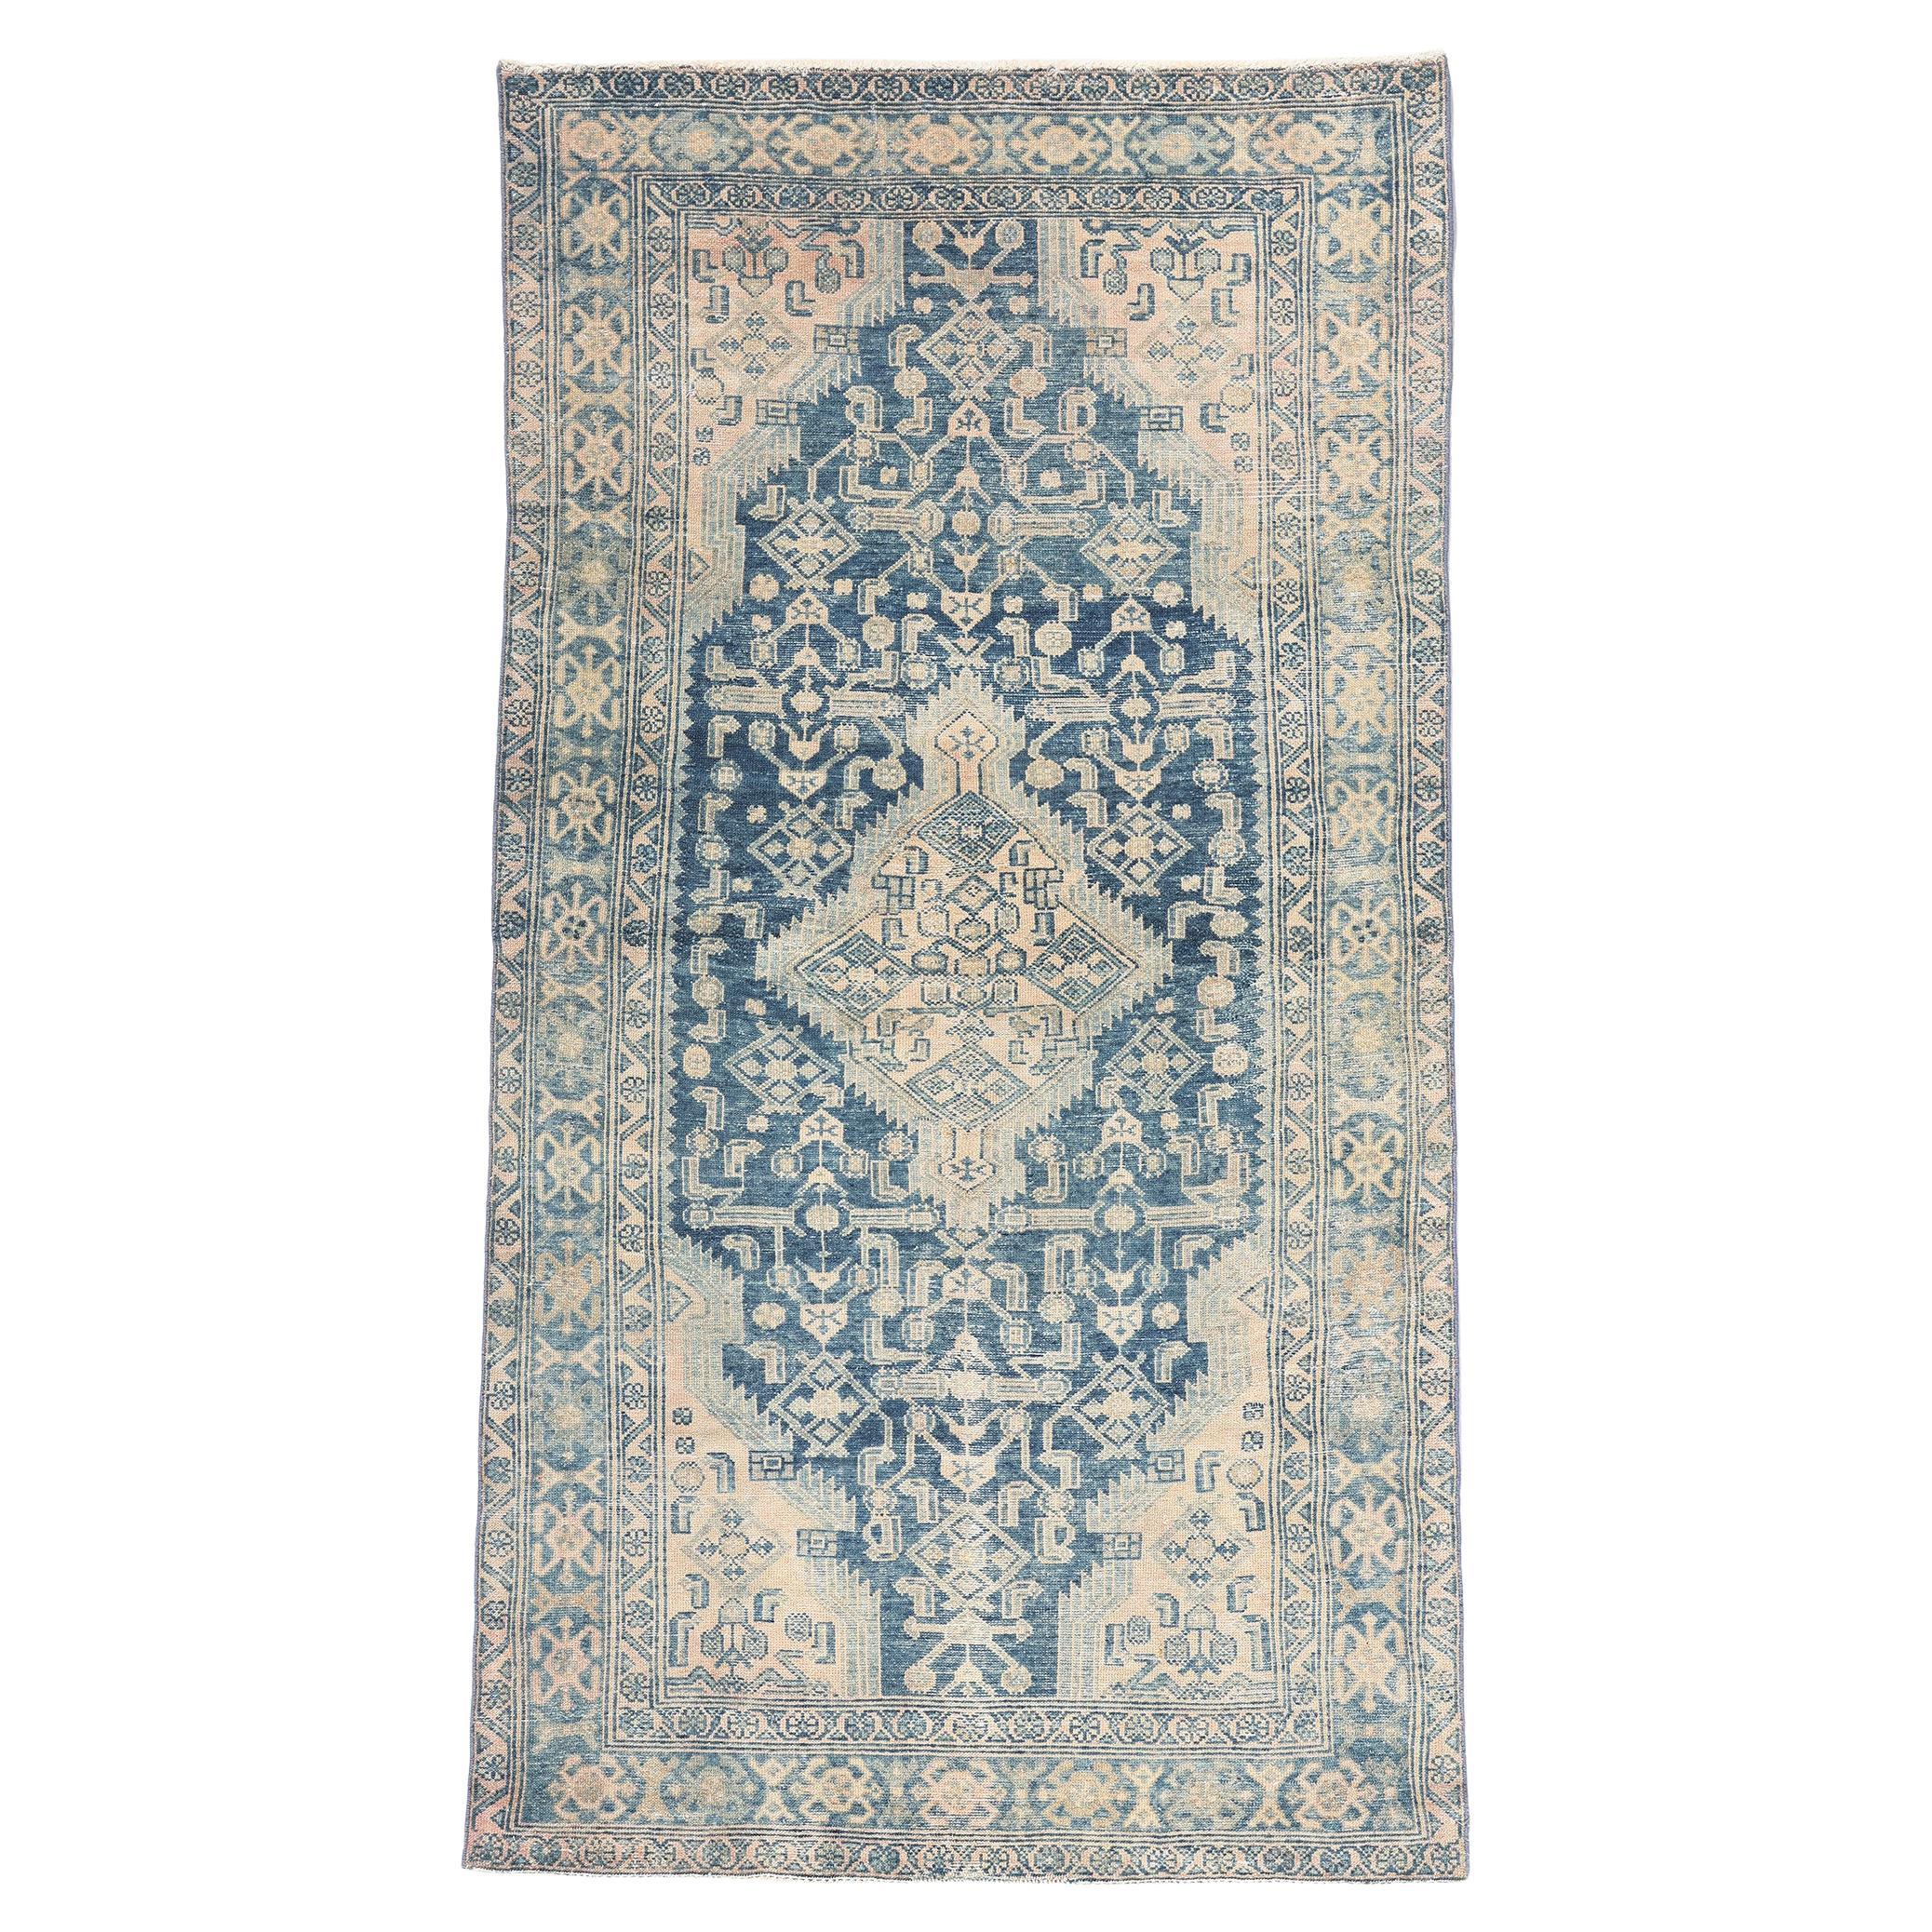 Antique Blue Persian Malayer Carpet